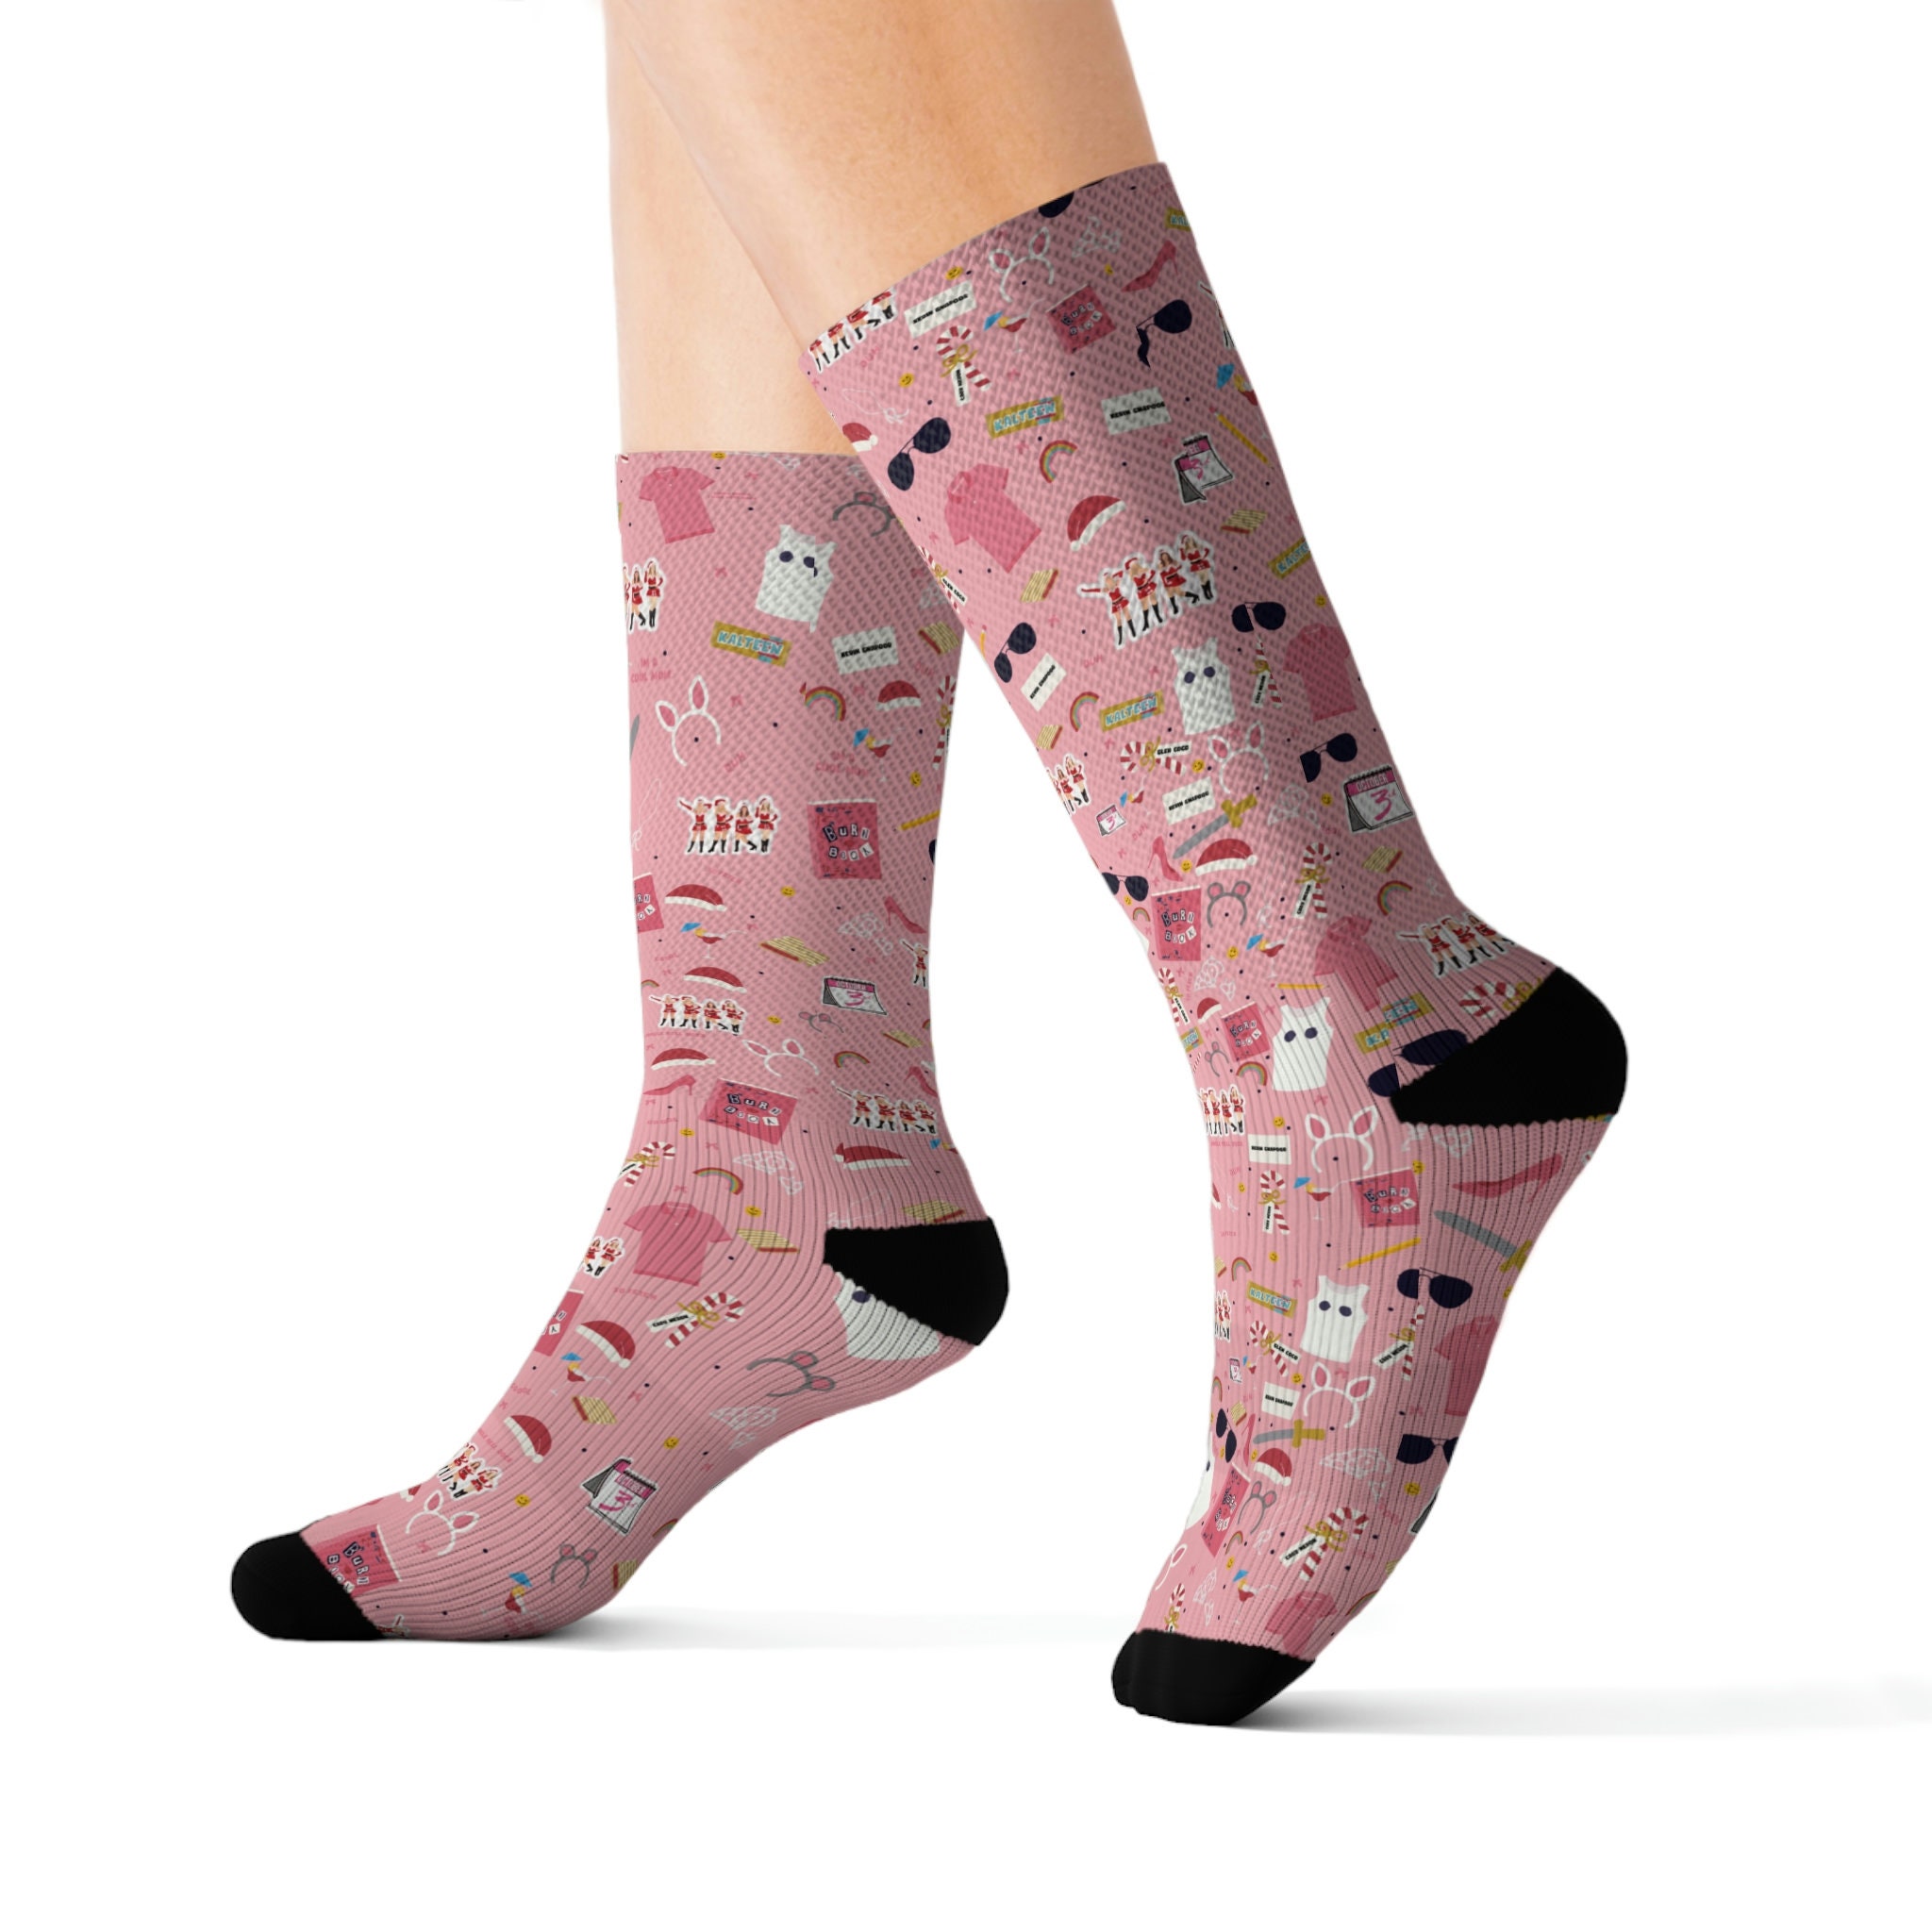 Mean Girls Socks for Sale by Lunastar5